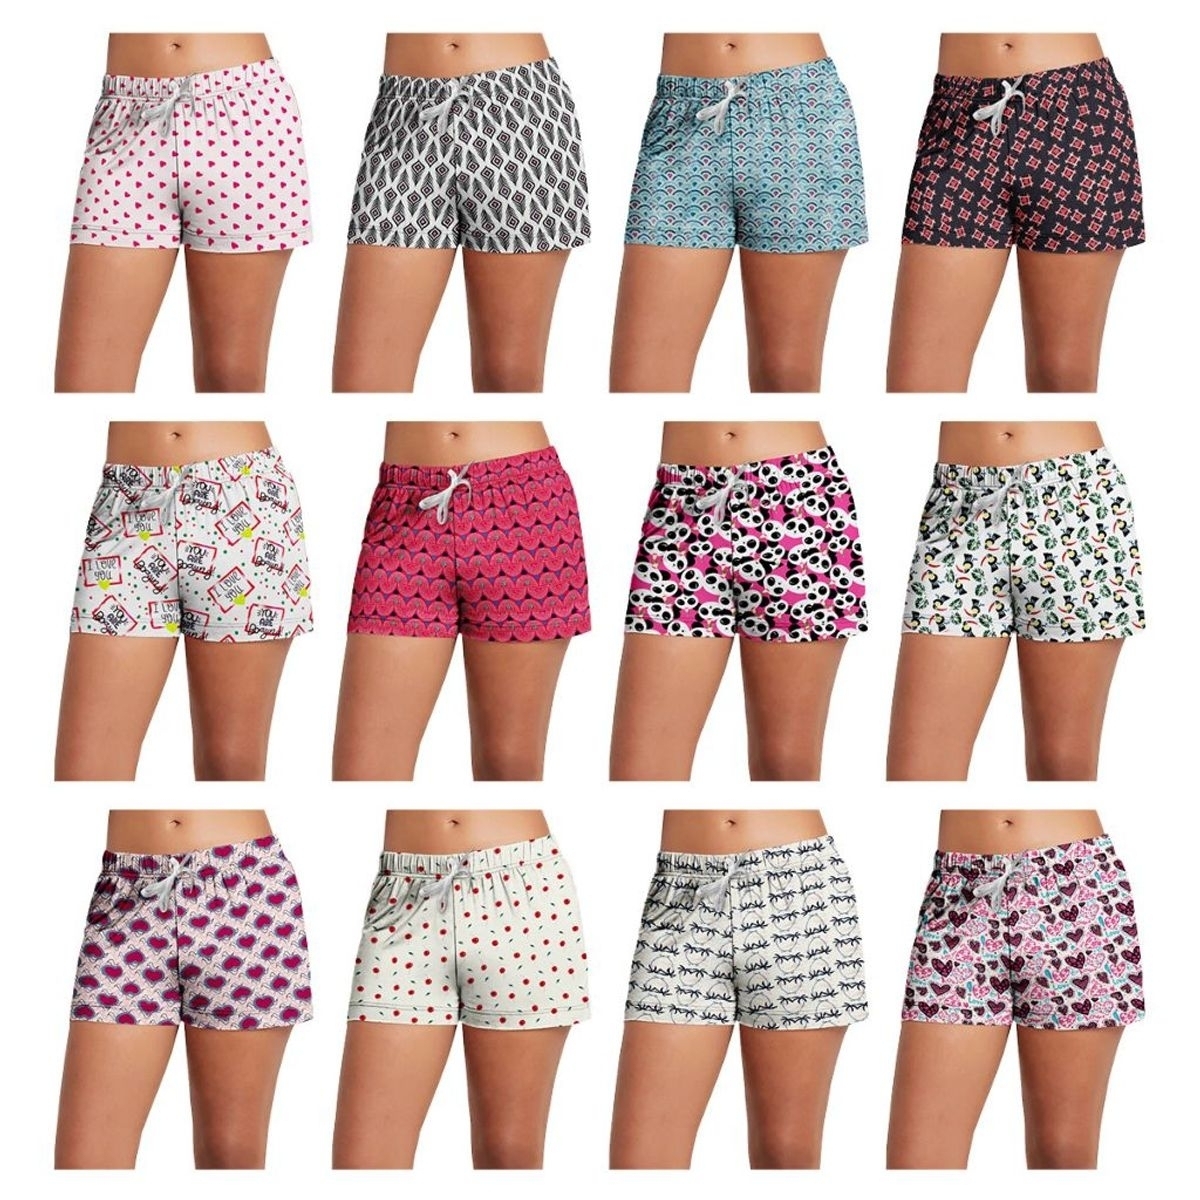 Multi-Pack: Women's Super-Soft Lightweight Fun Printed Comfy Lounge Bottom Pajama Shorts W/ Drawstring - 5-pack, X-large, Shapes